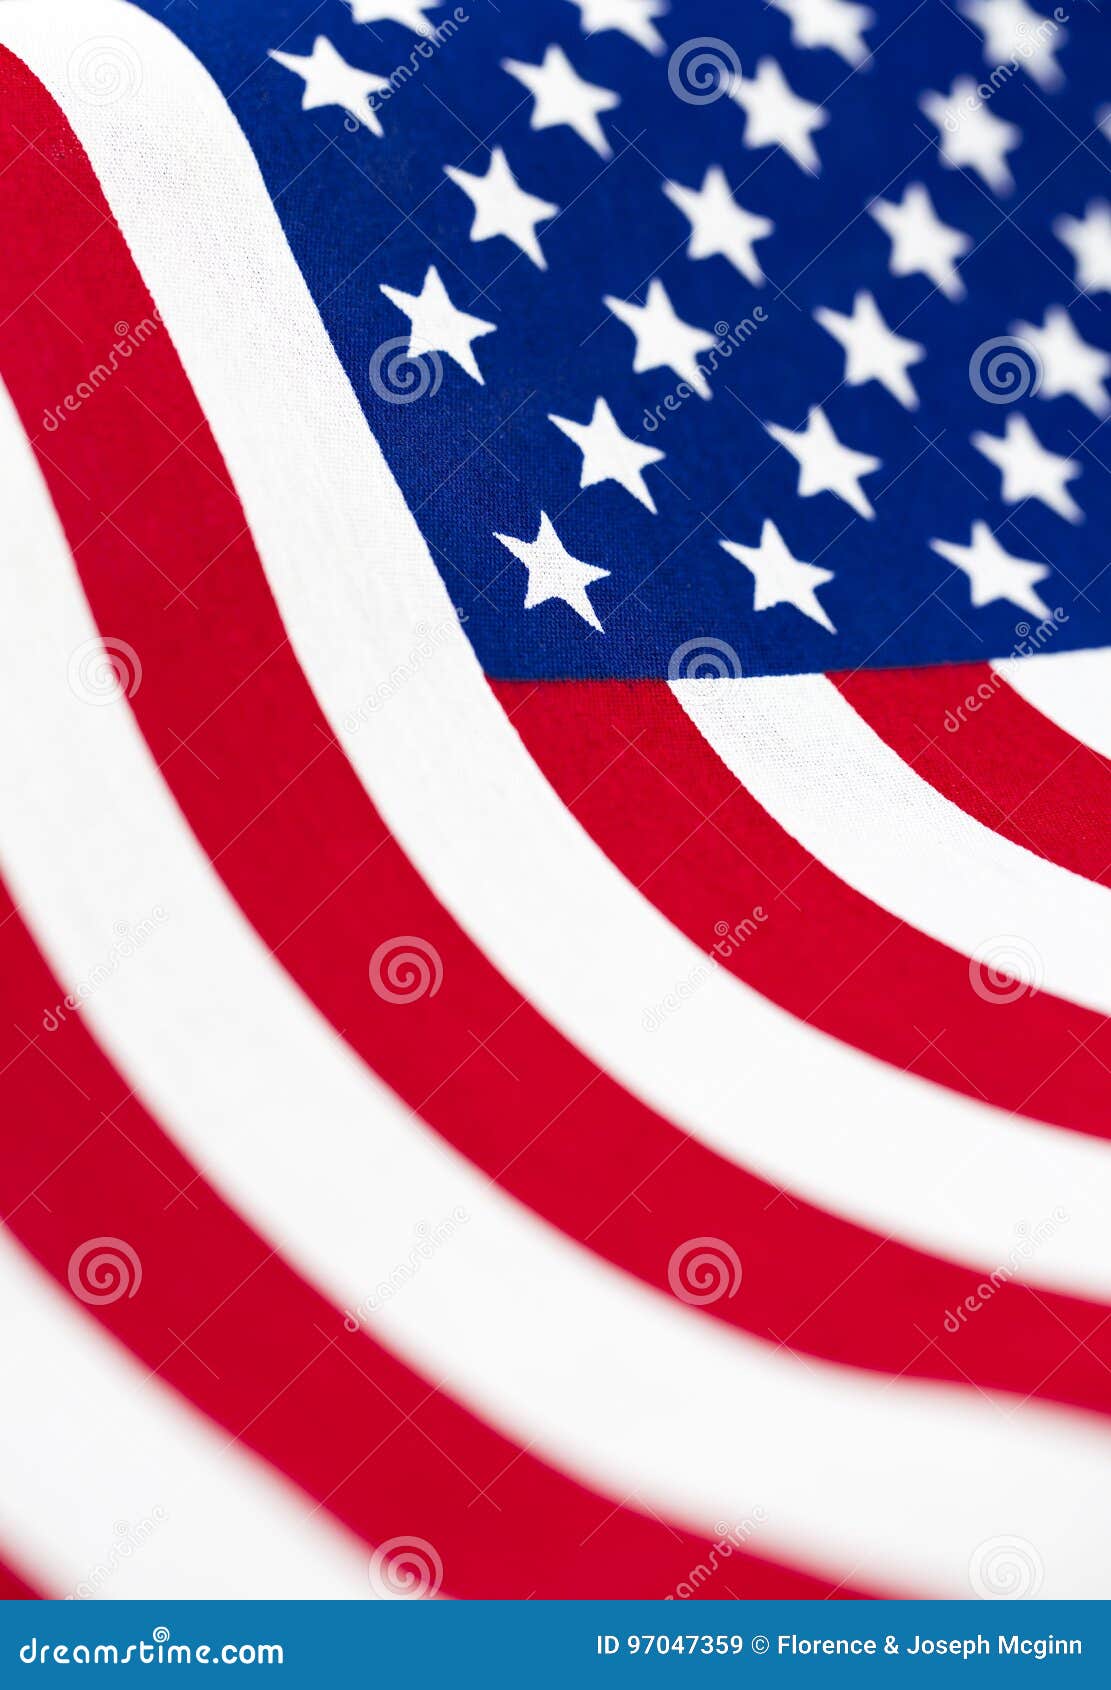 Best Flag iPhone 8 HD Wallpapers  iLikeWallpaper